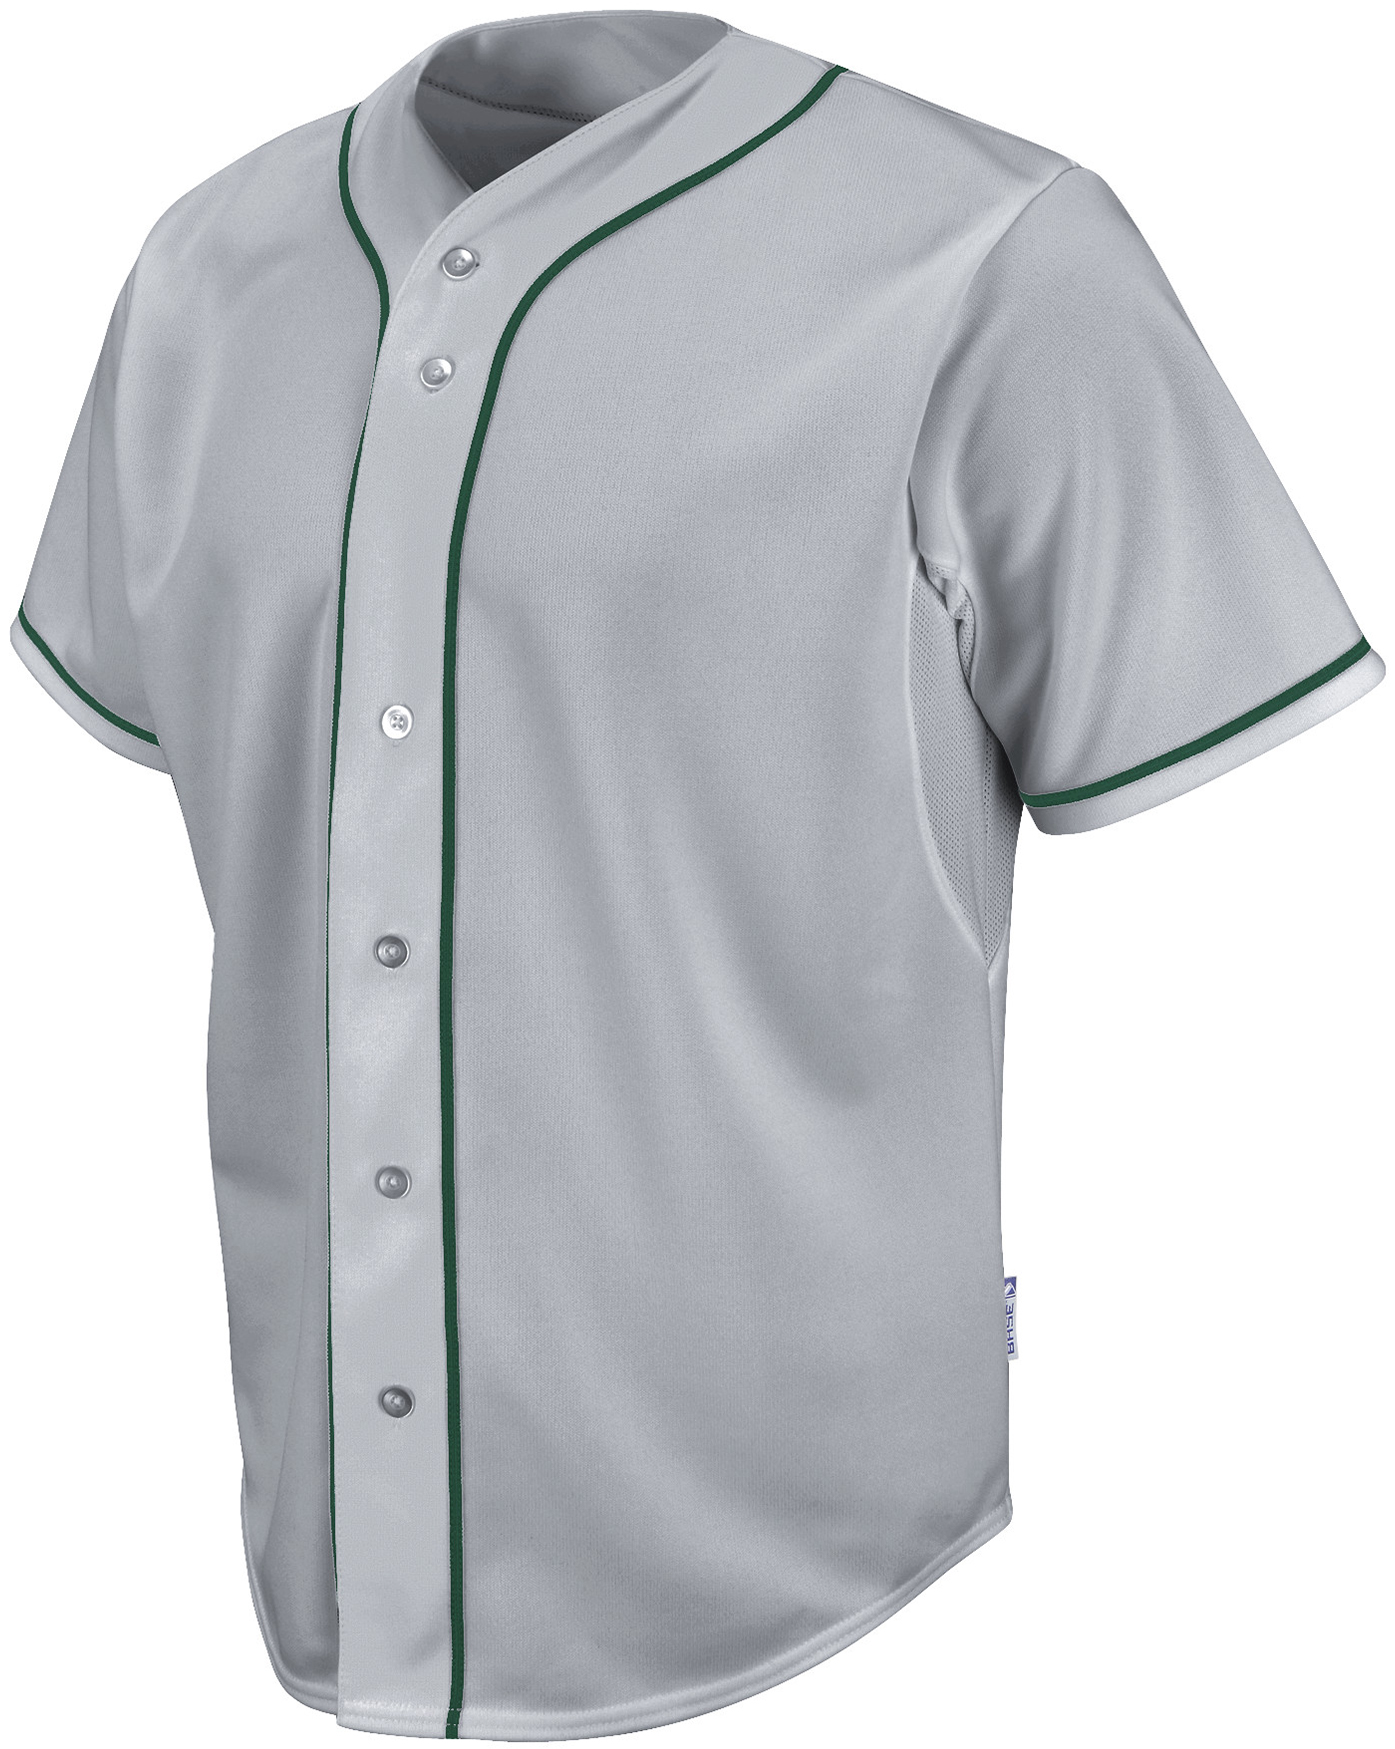 generic baseball jersey